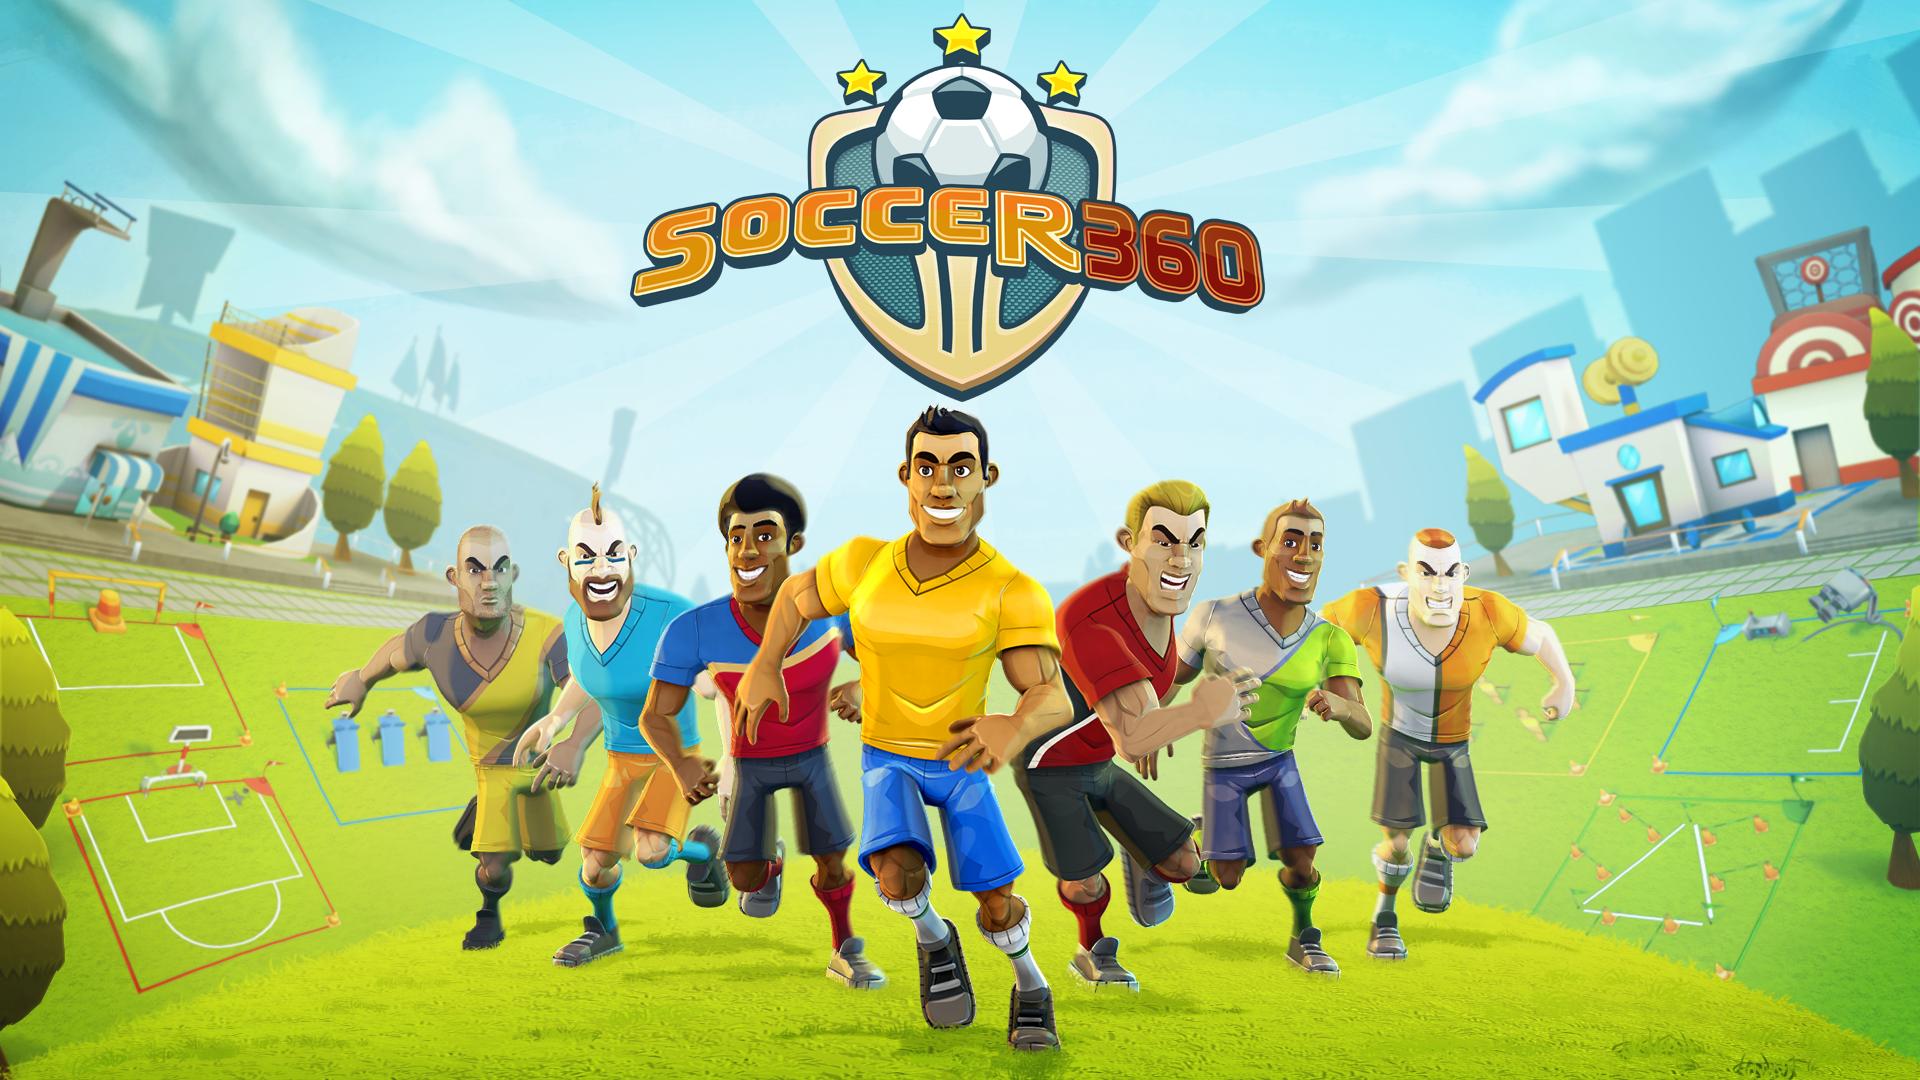 360 soccer. Мультяшки играют в футбол. Soccer game.